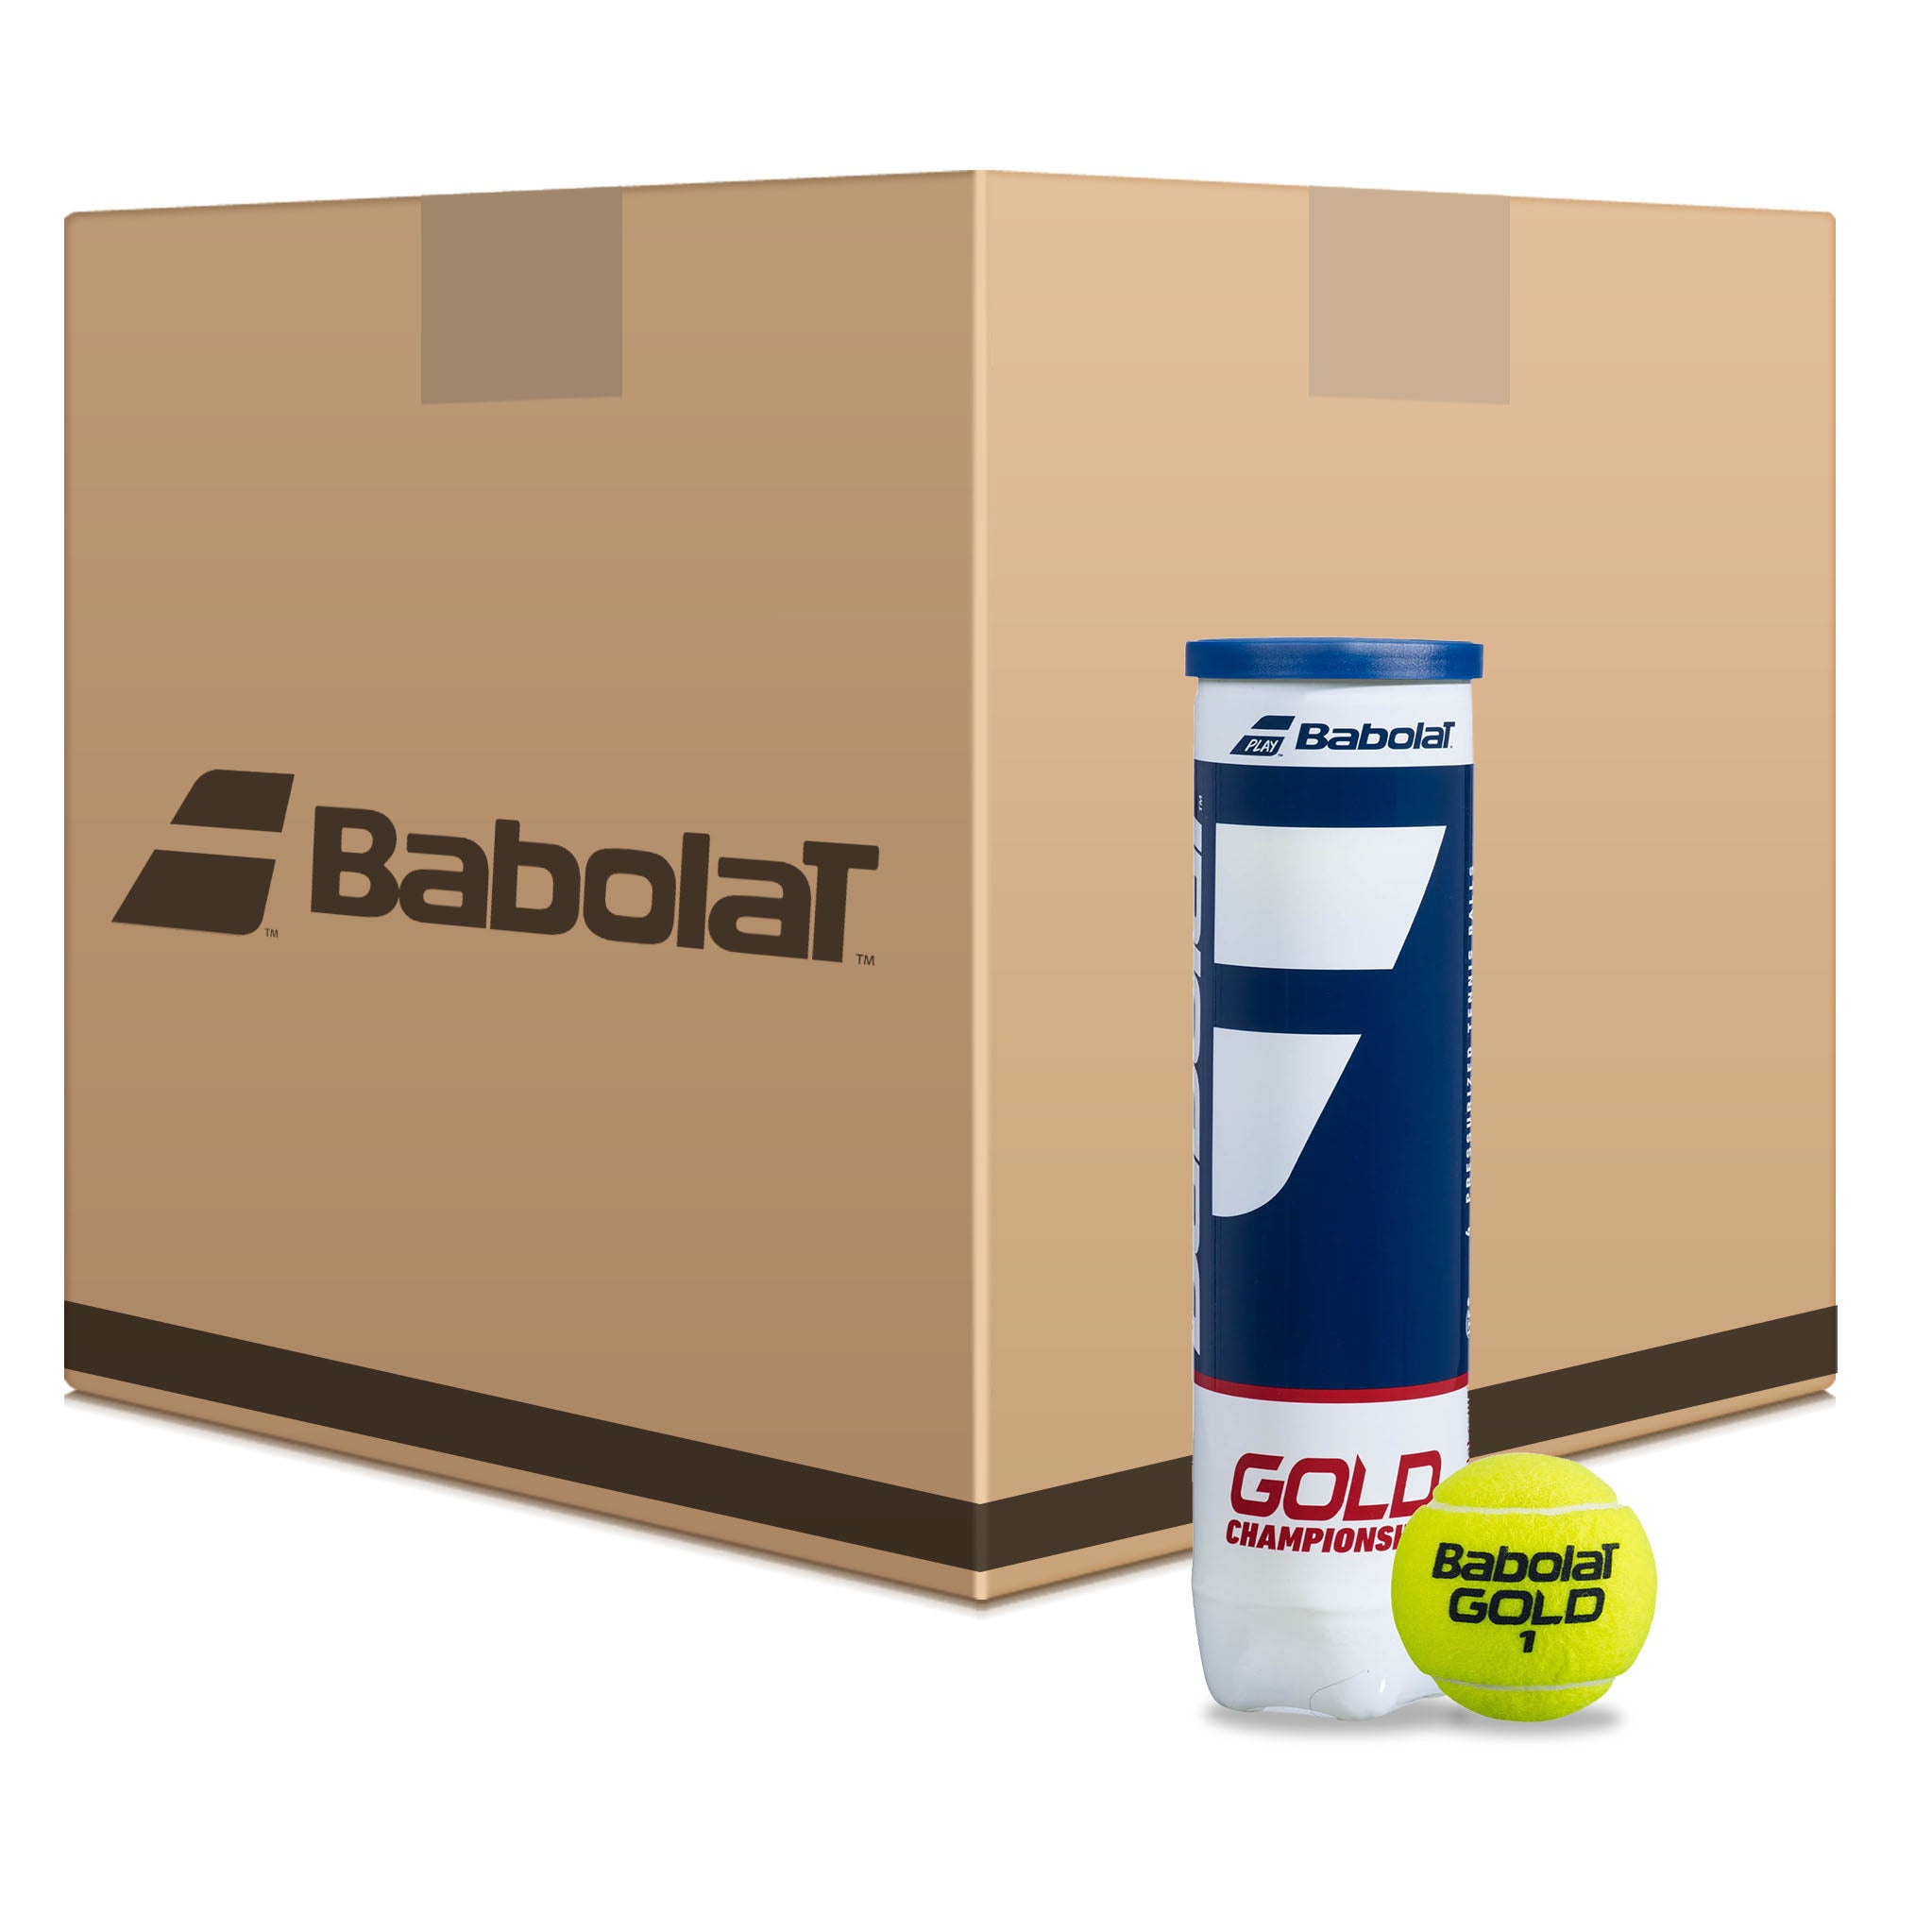 Babolat Gold Championship Tennis Balls - 6 Dozen